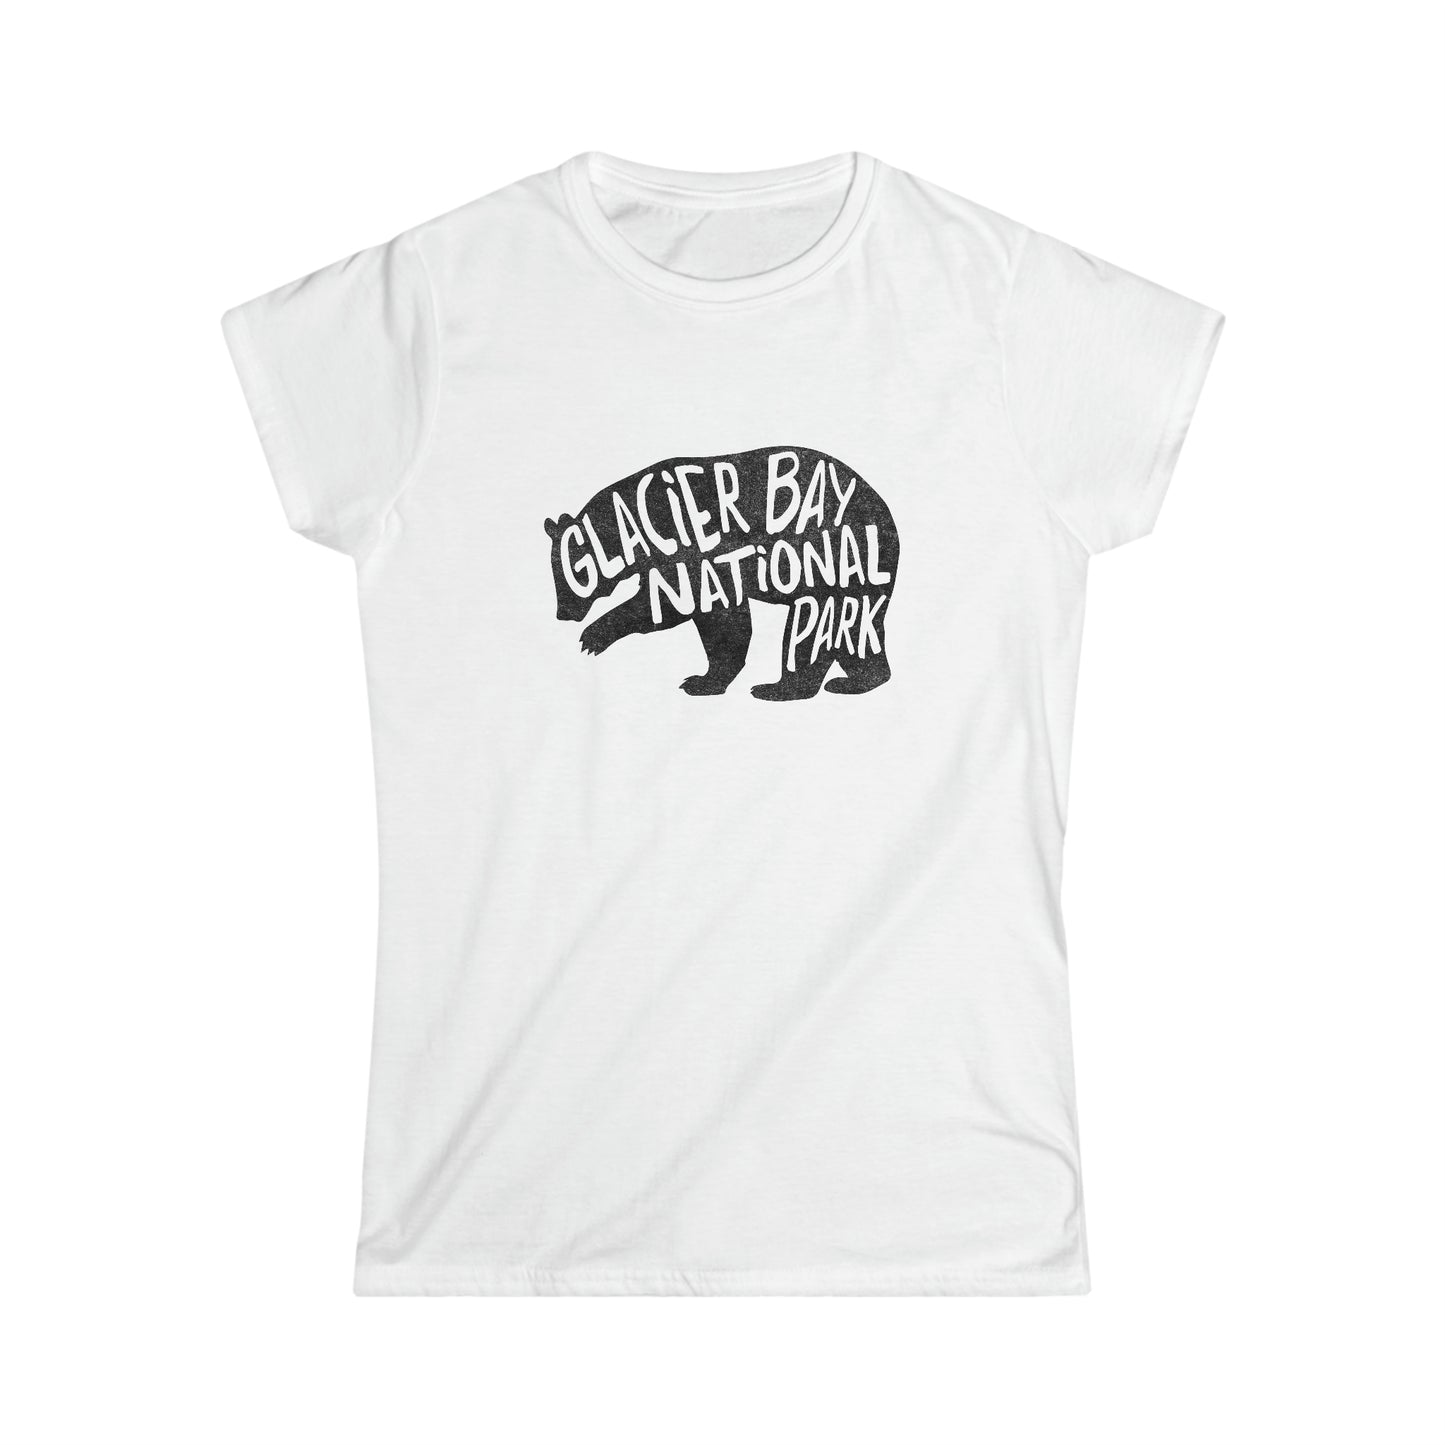 Glacier Bay National Park Women's T-Shirt - Grizzly Bear